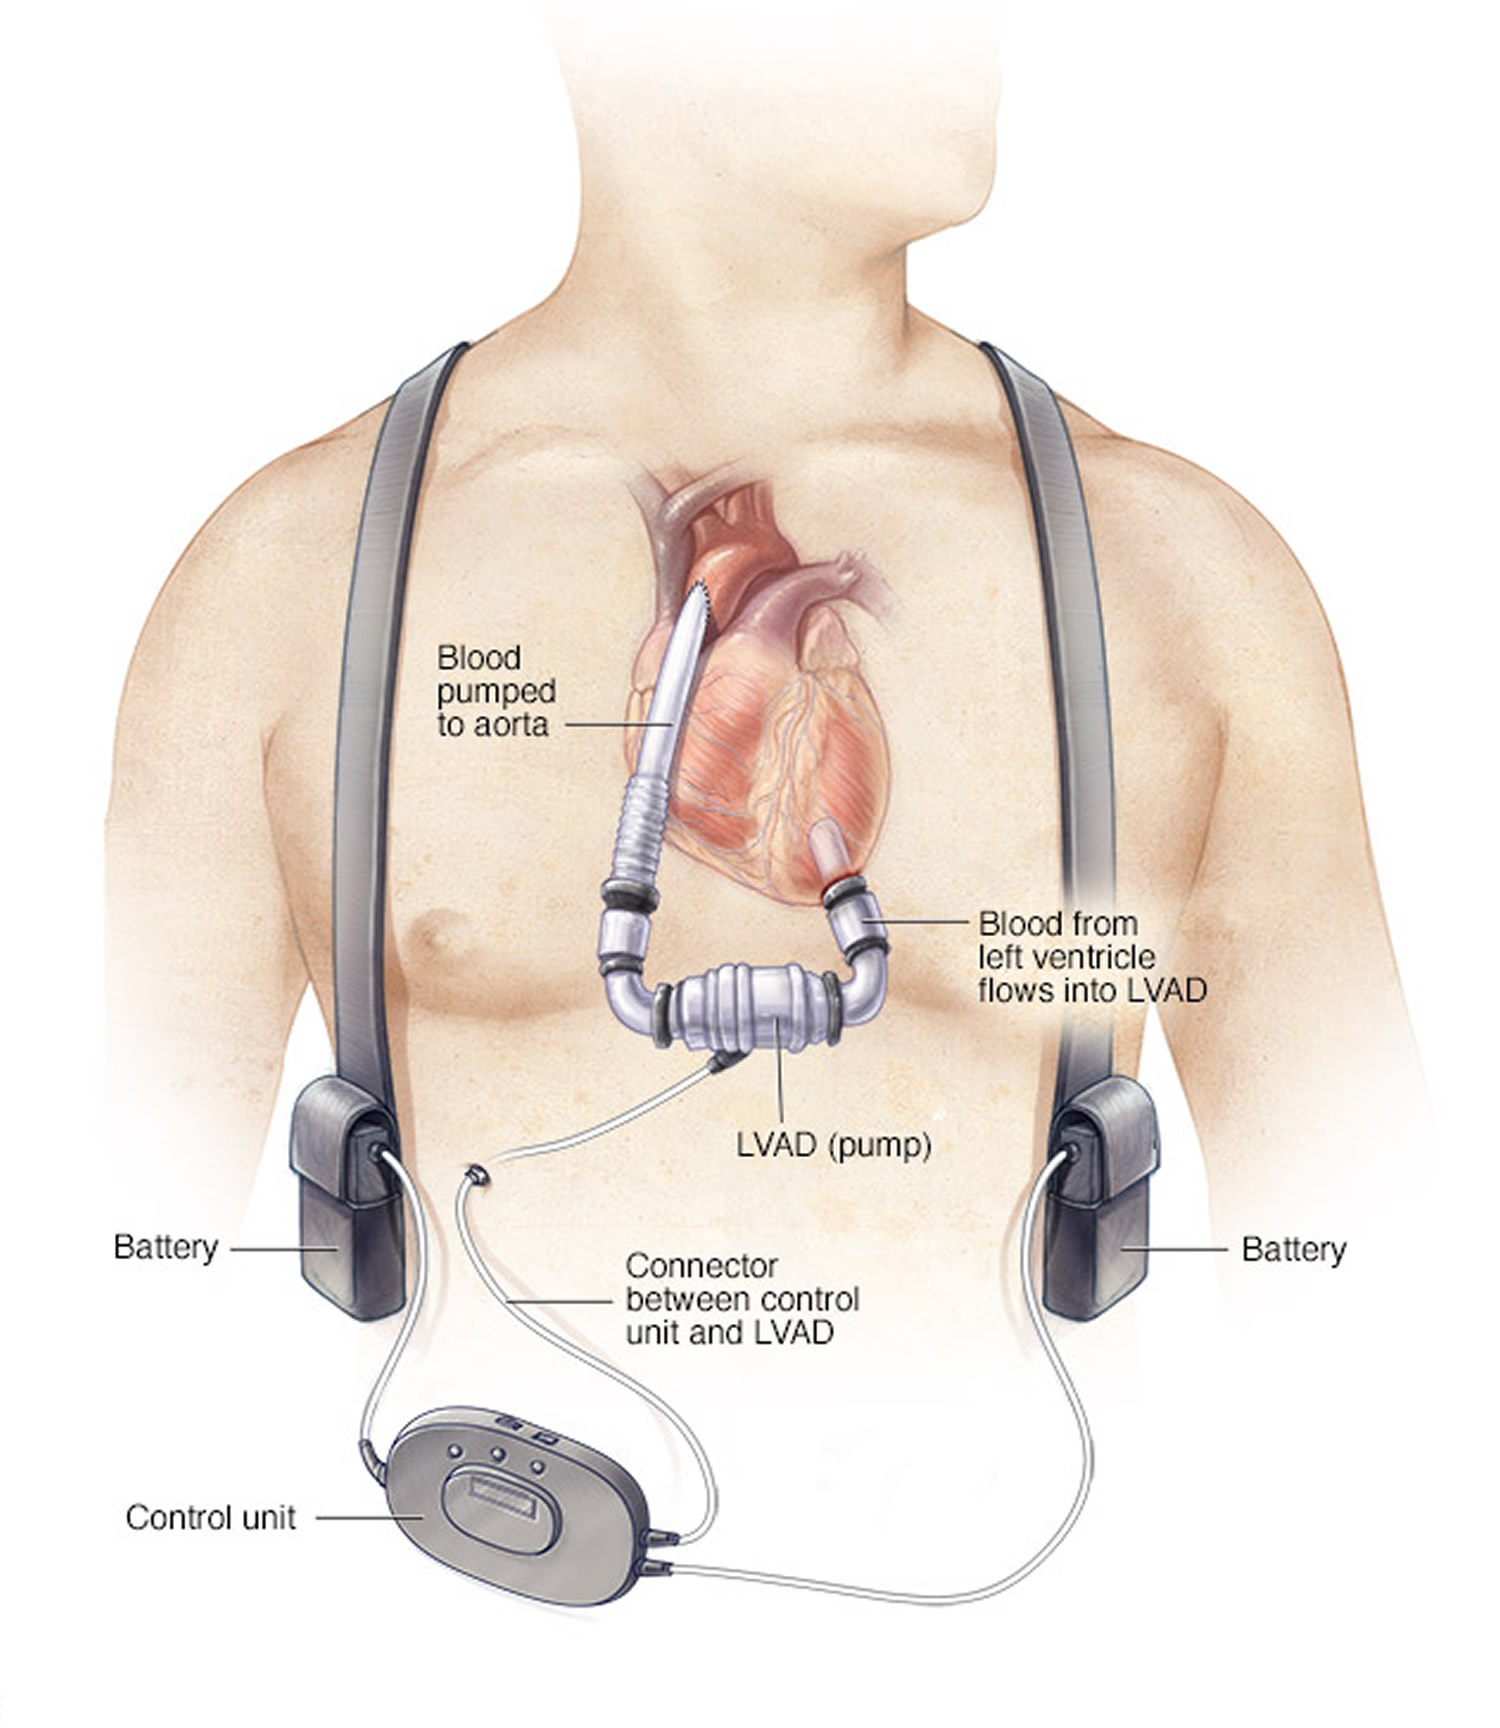 Left ventricular assist device